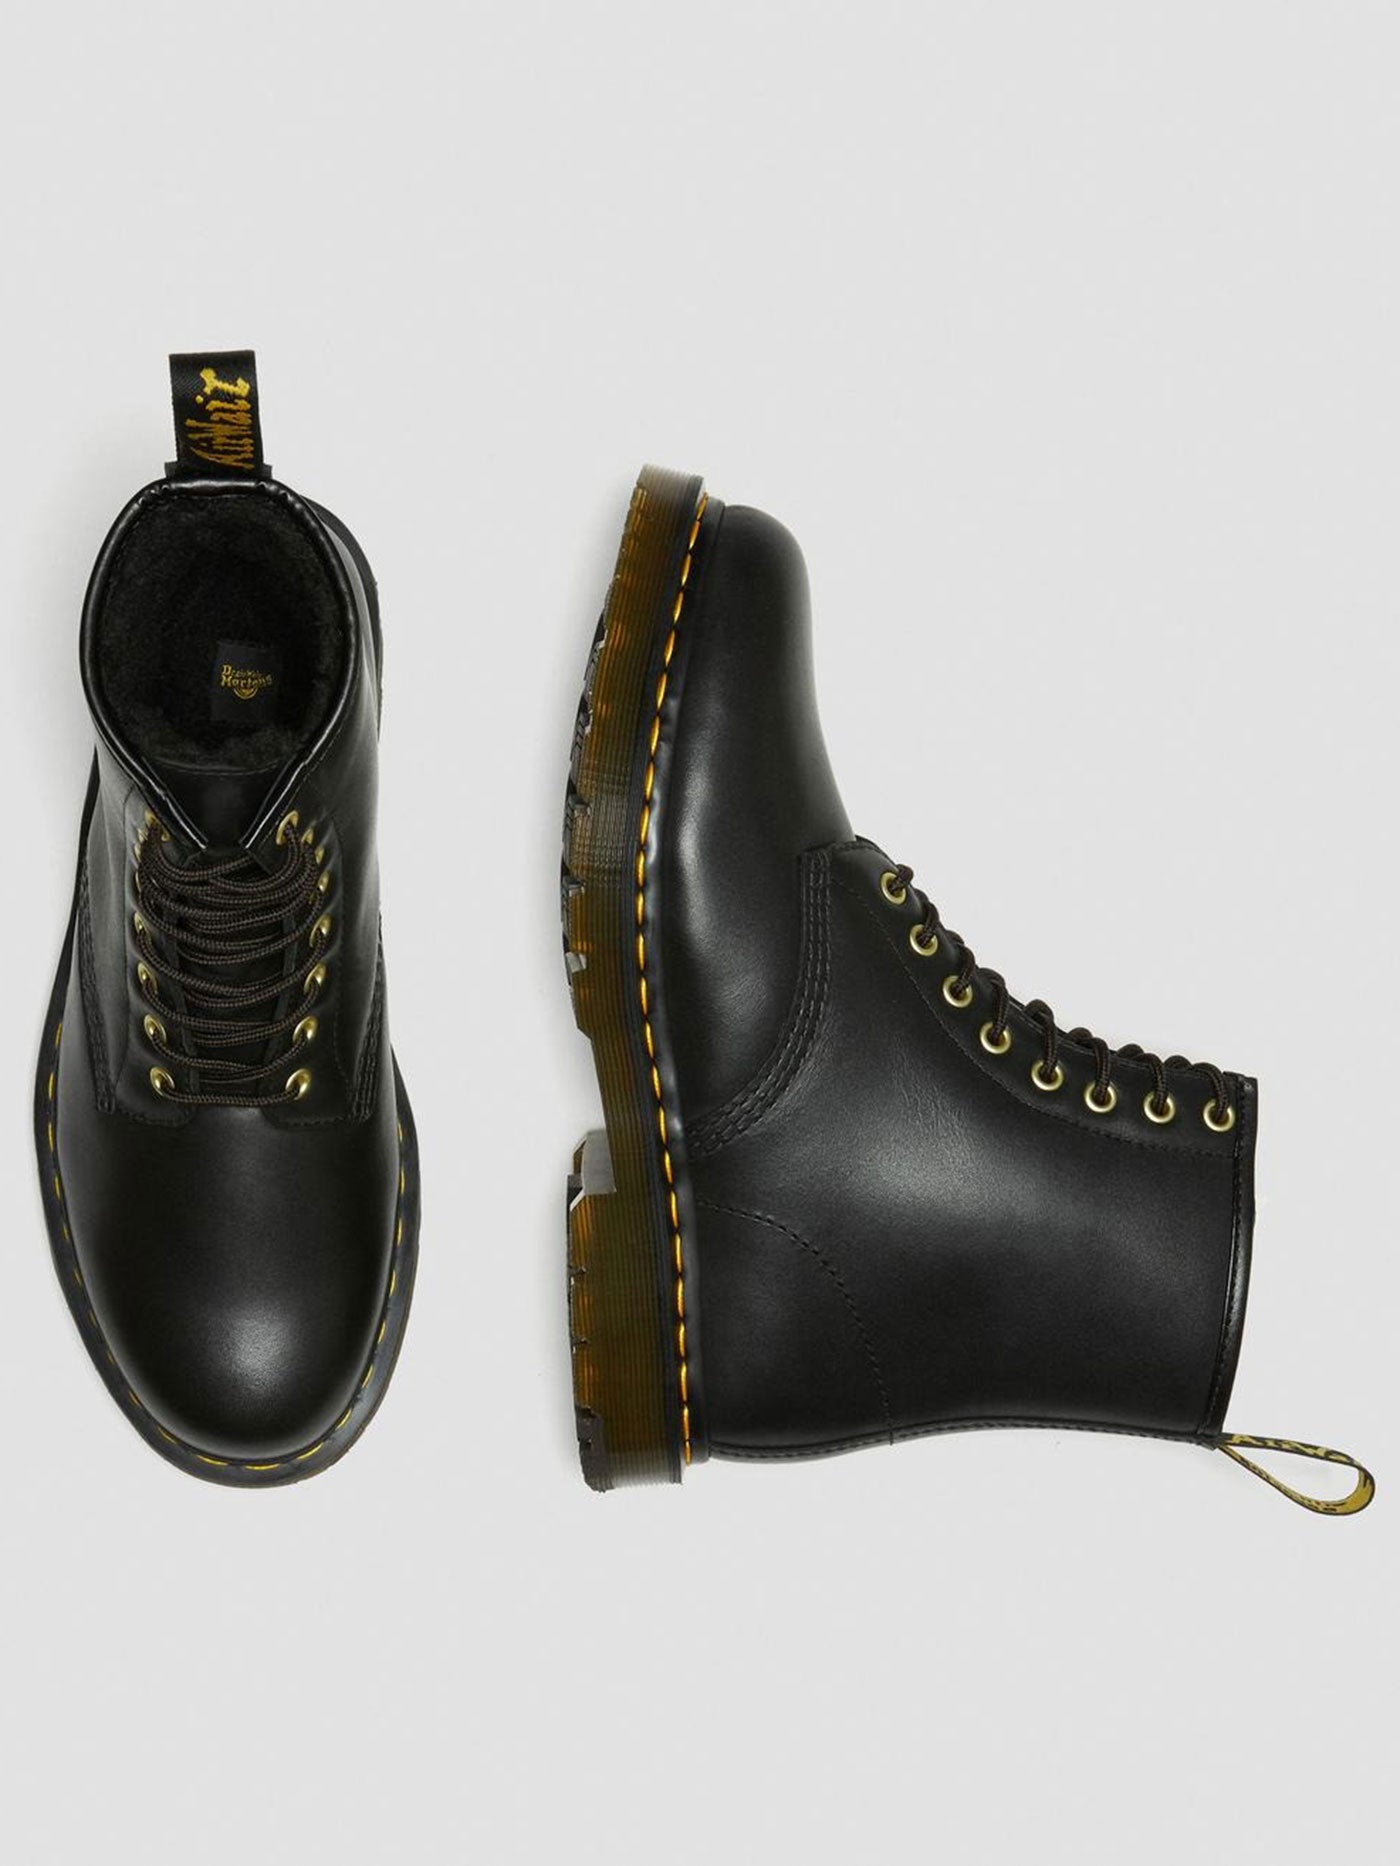 Dr. Martens 1460 Wintergrip Black Blizzard WP Leather Boots | EMPIRE